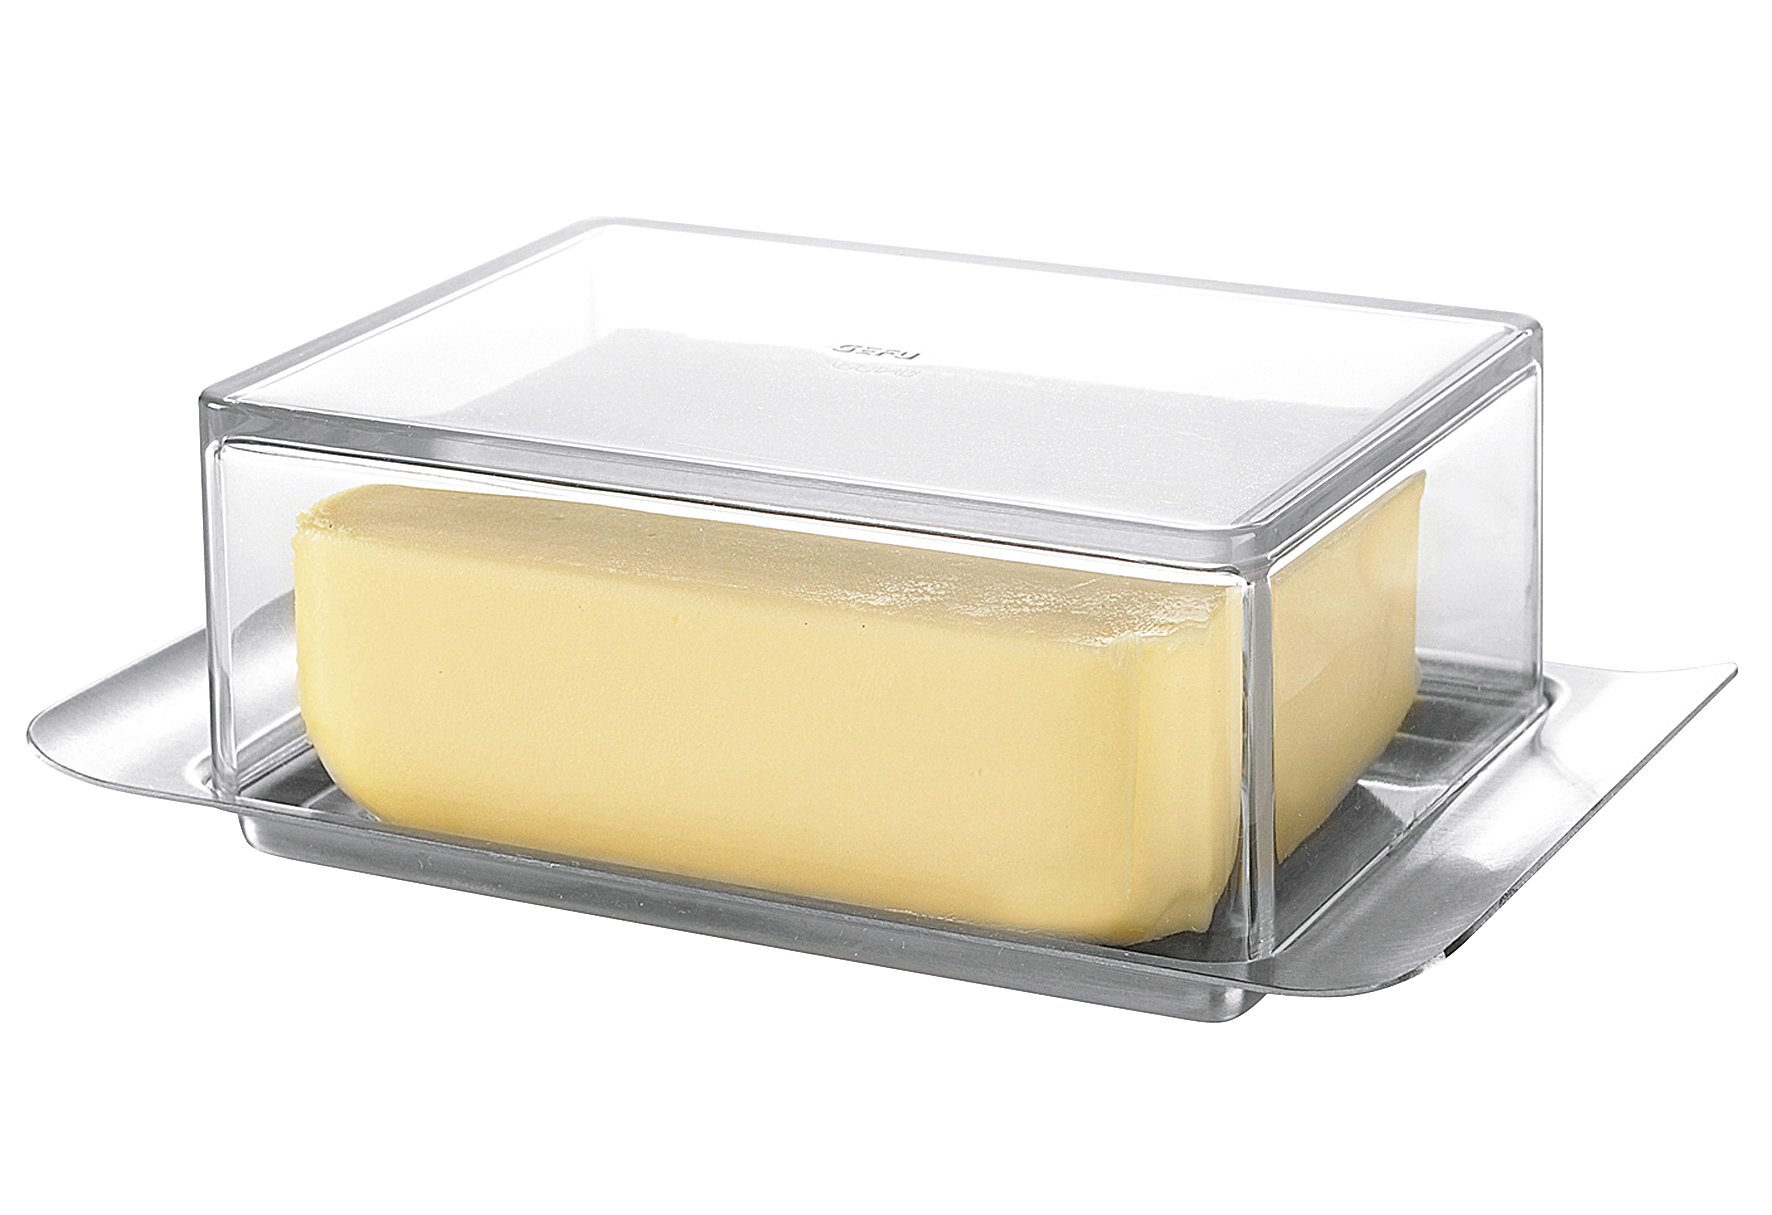  Butterdose   Brunch    hochwertiger Edelstahl / Kunststoff spülmaschineng 